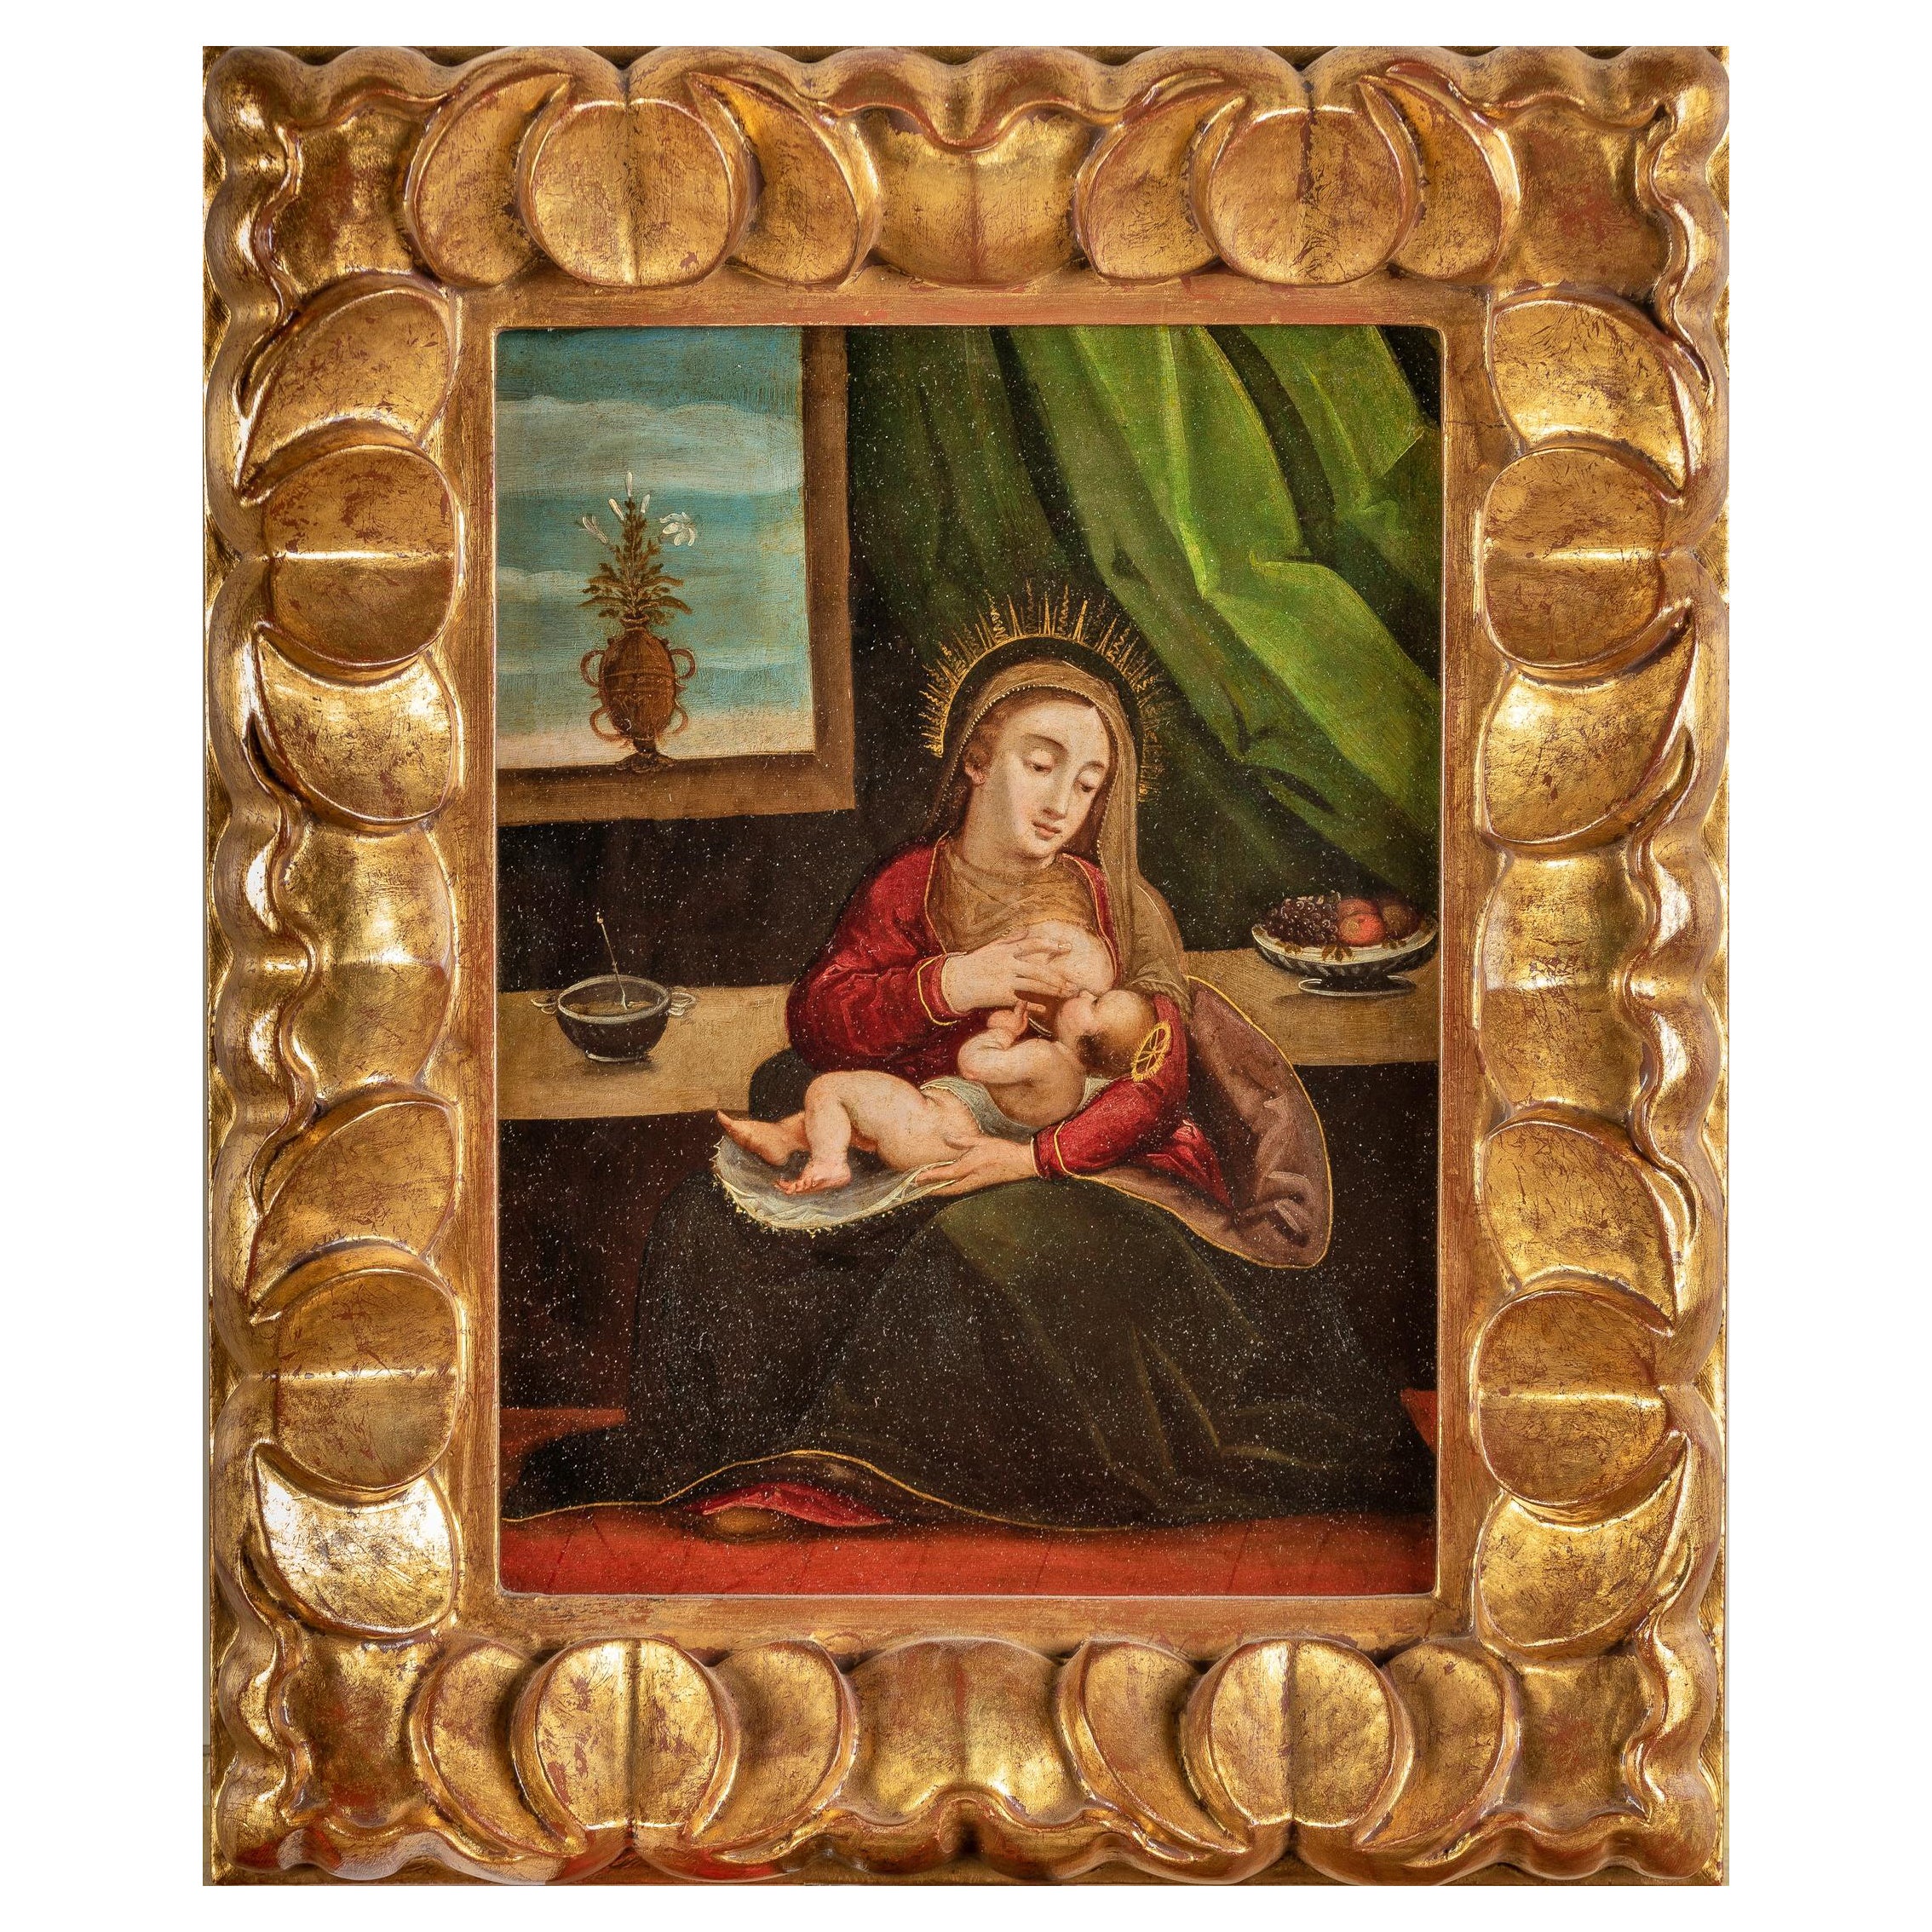 Flemish School 16th Century '1530/1550' "The Virgin of the Milk" 